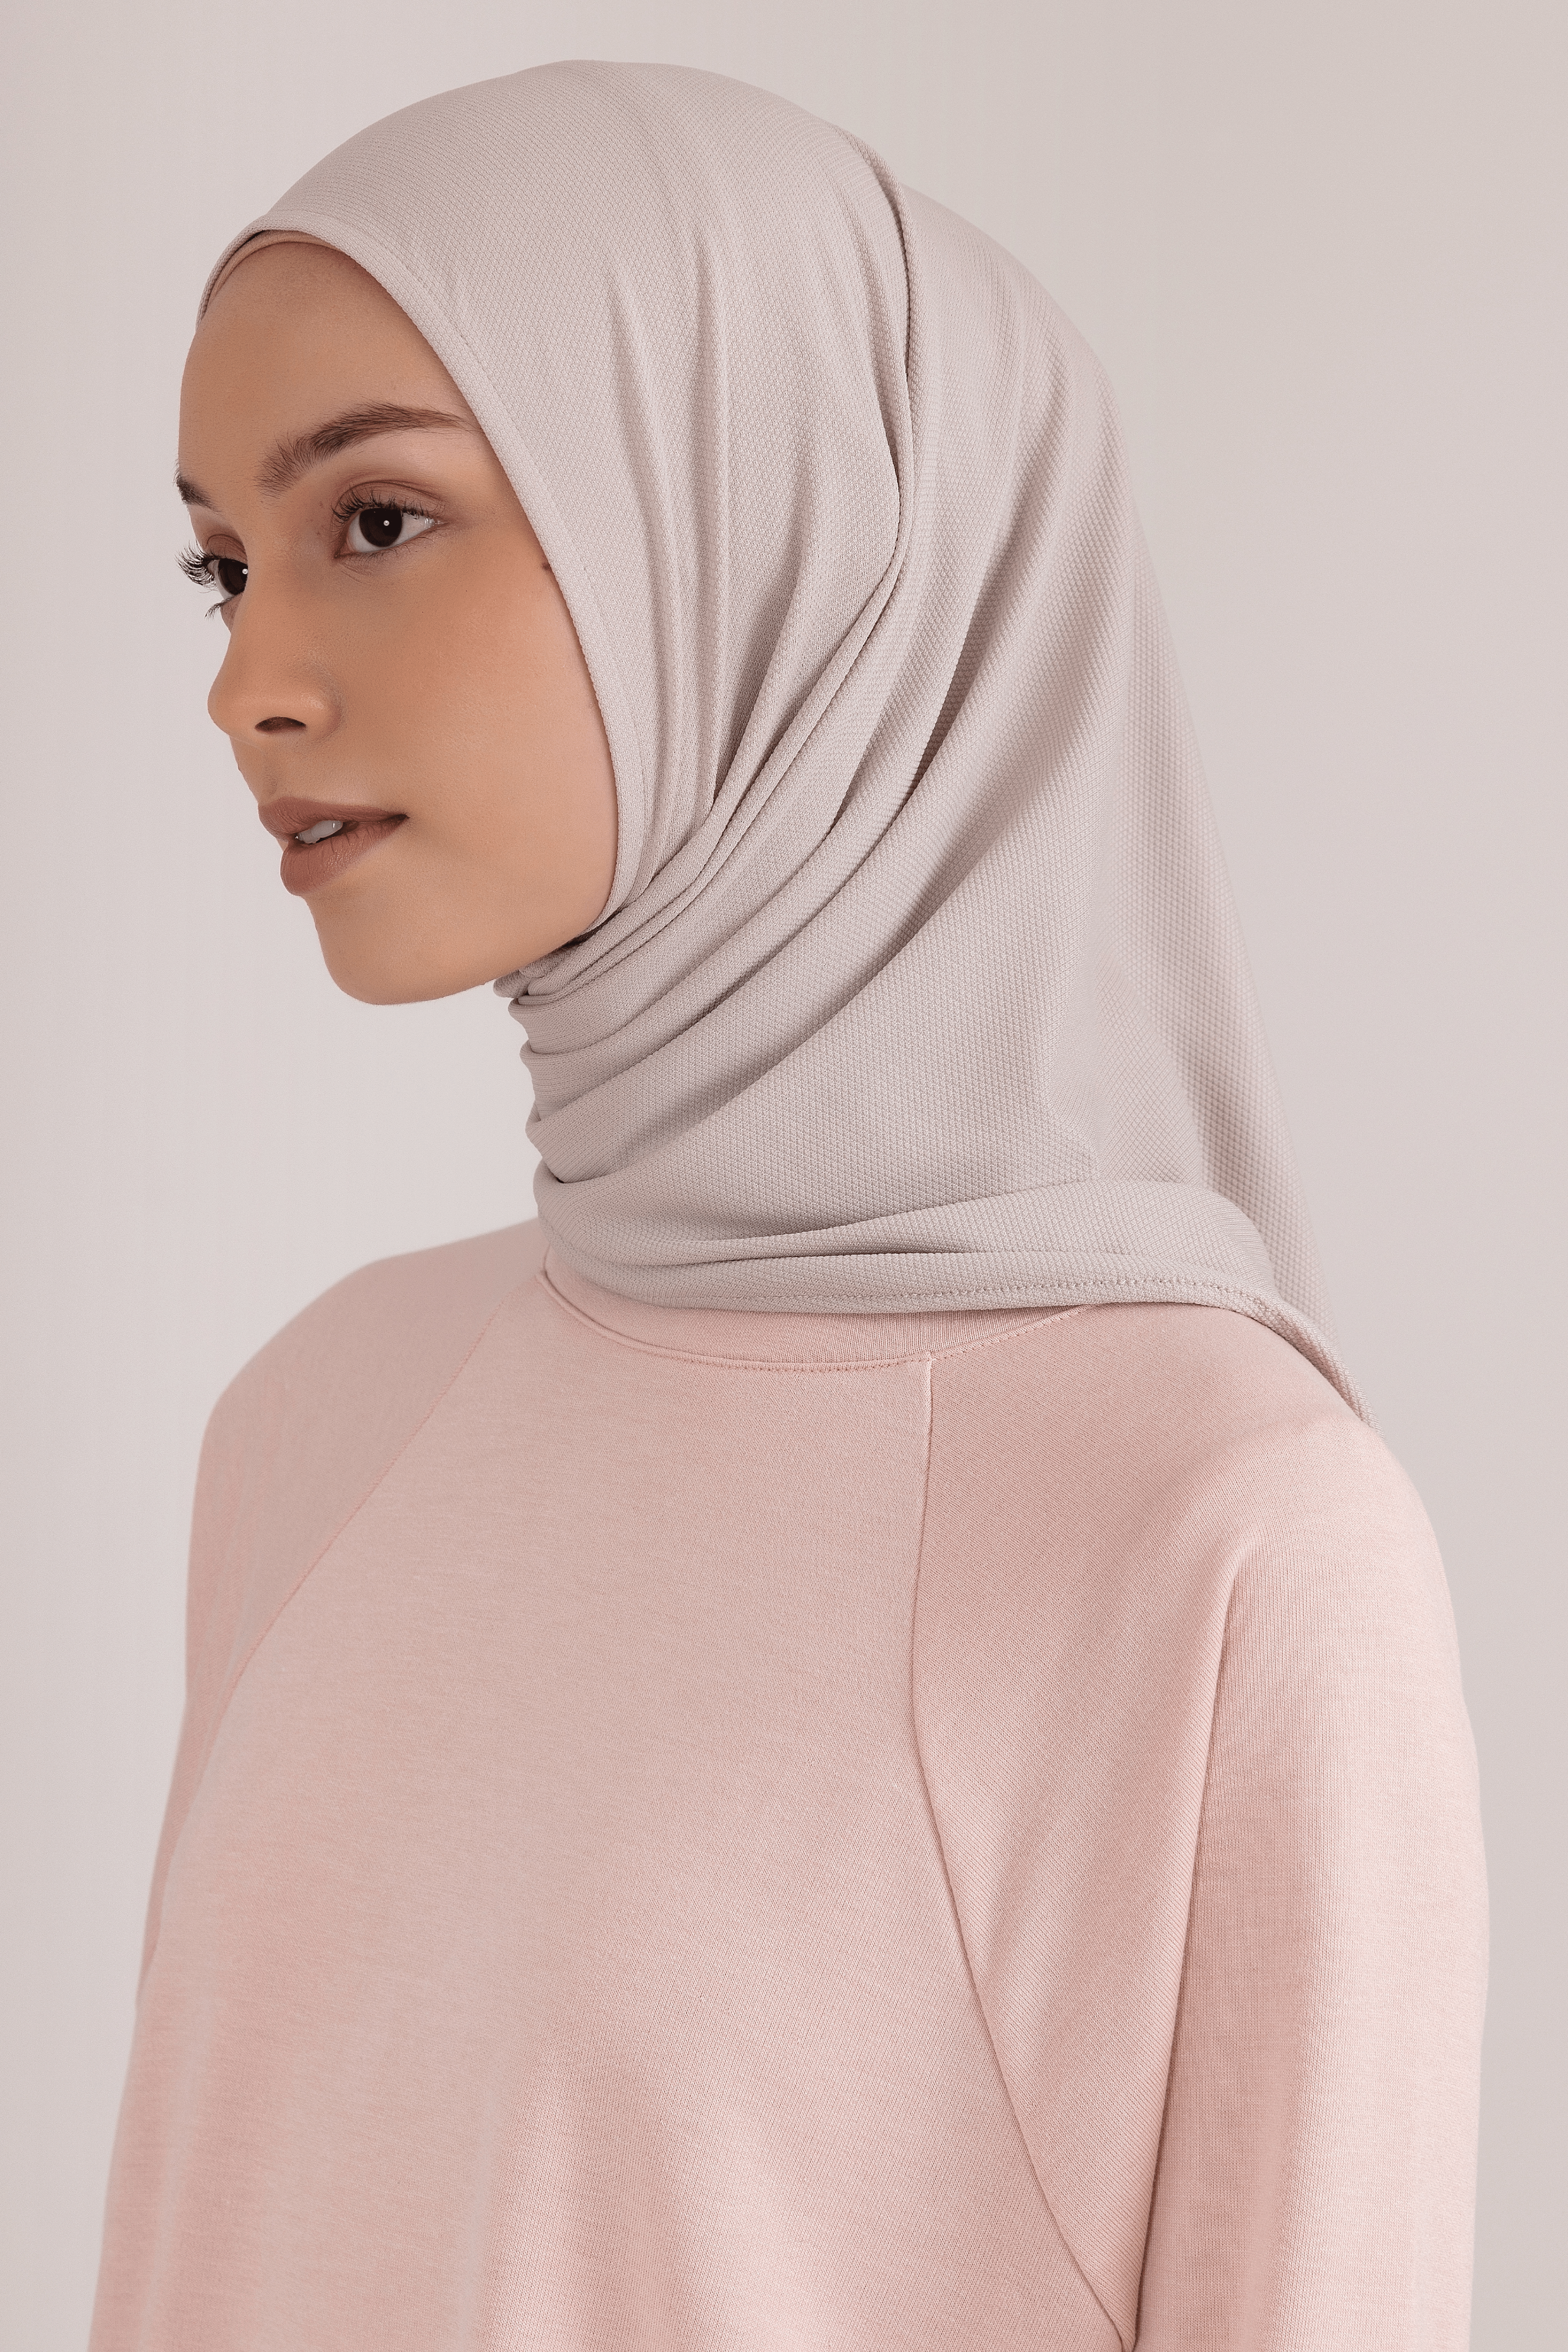 LAICA x RiaMiranda Instant Hijab - Sand